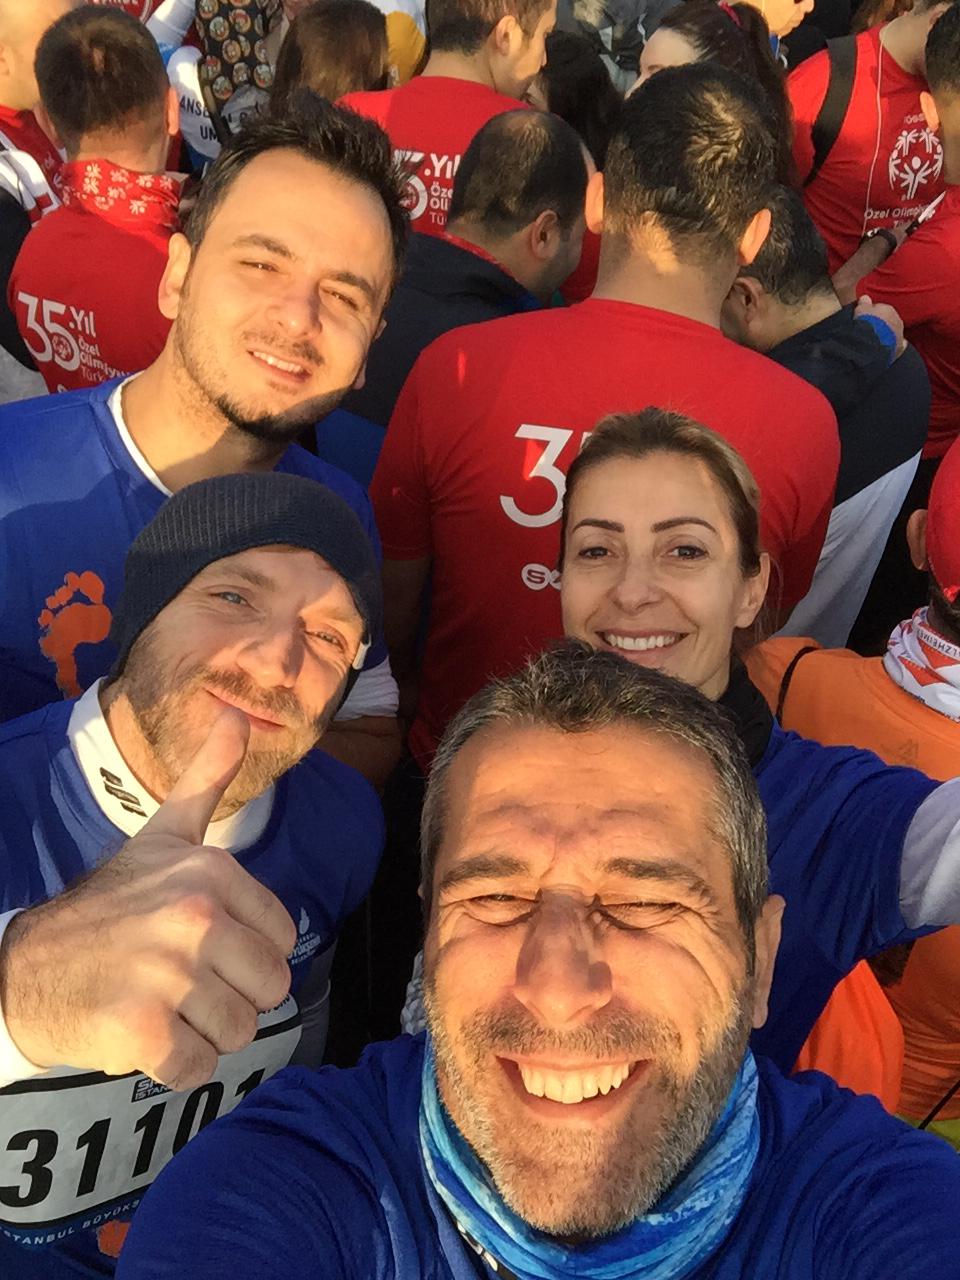 İstanbul Maraton 2018